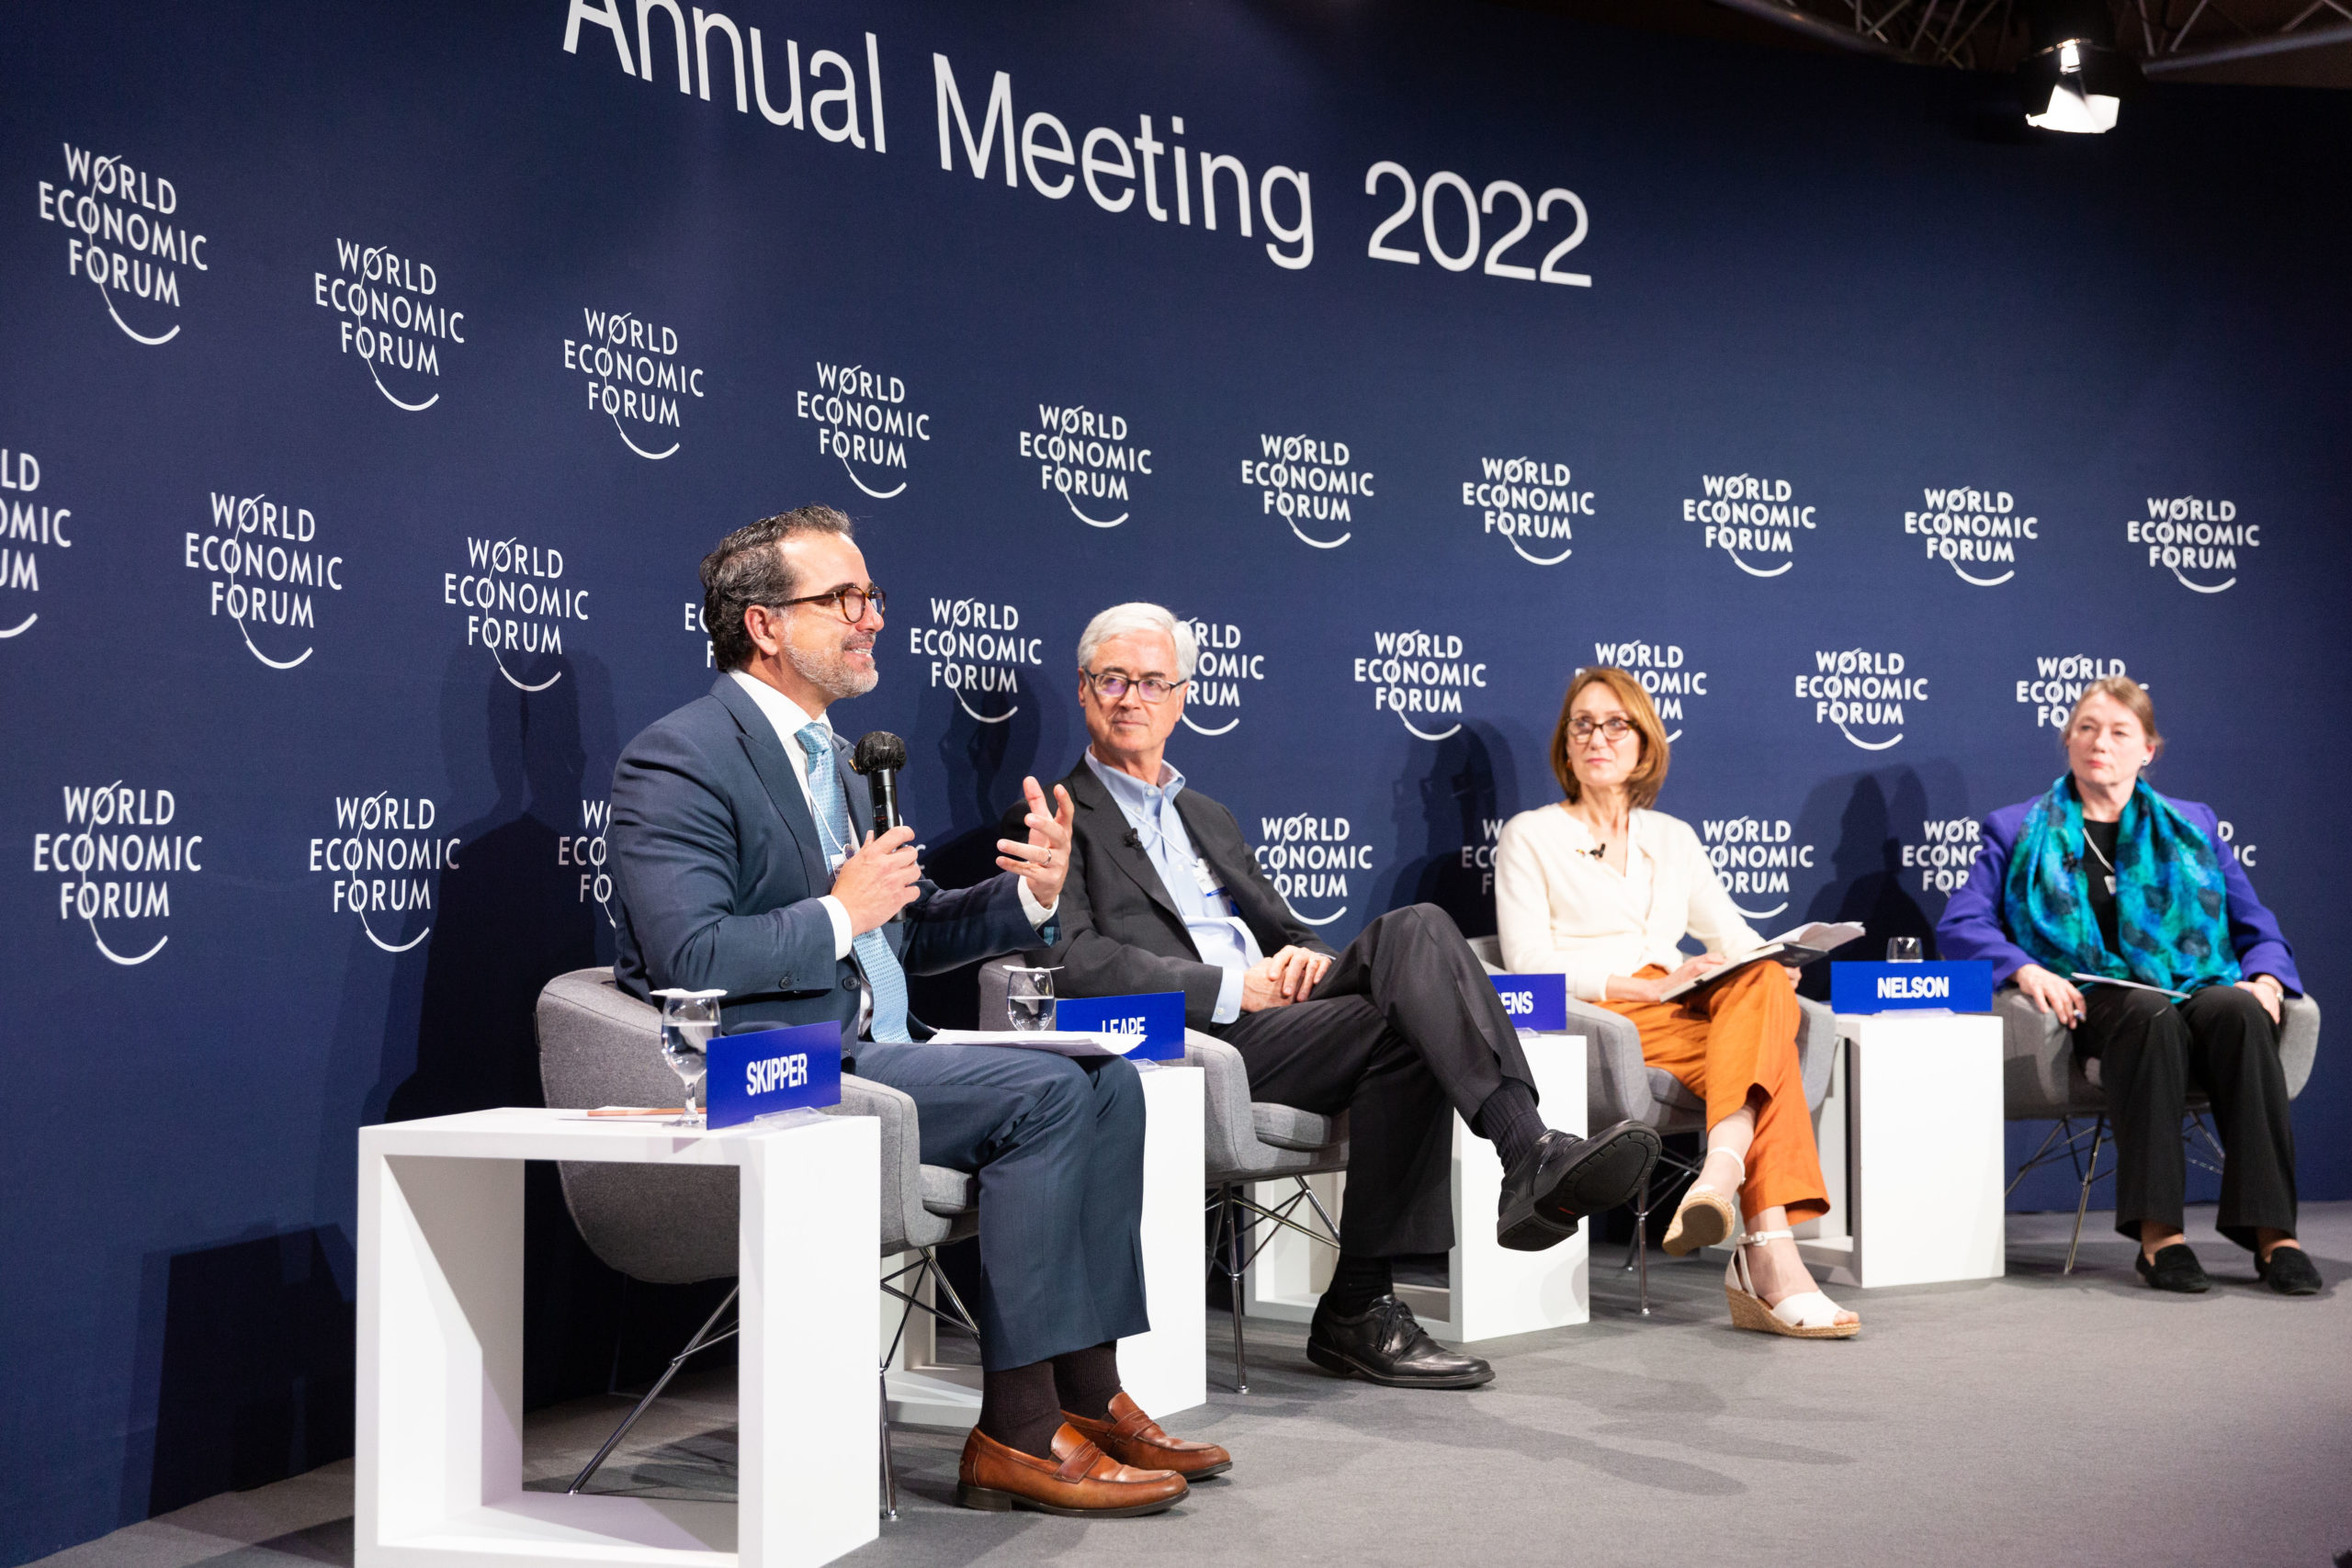 World Economic Forum Panel consisting of Elizabeth Cousens, Jim Leape, Jane Nelson and Magdalena Skipper.